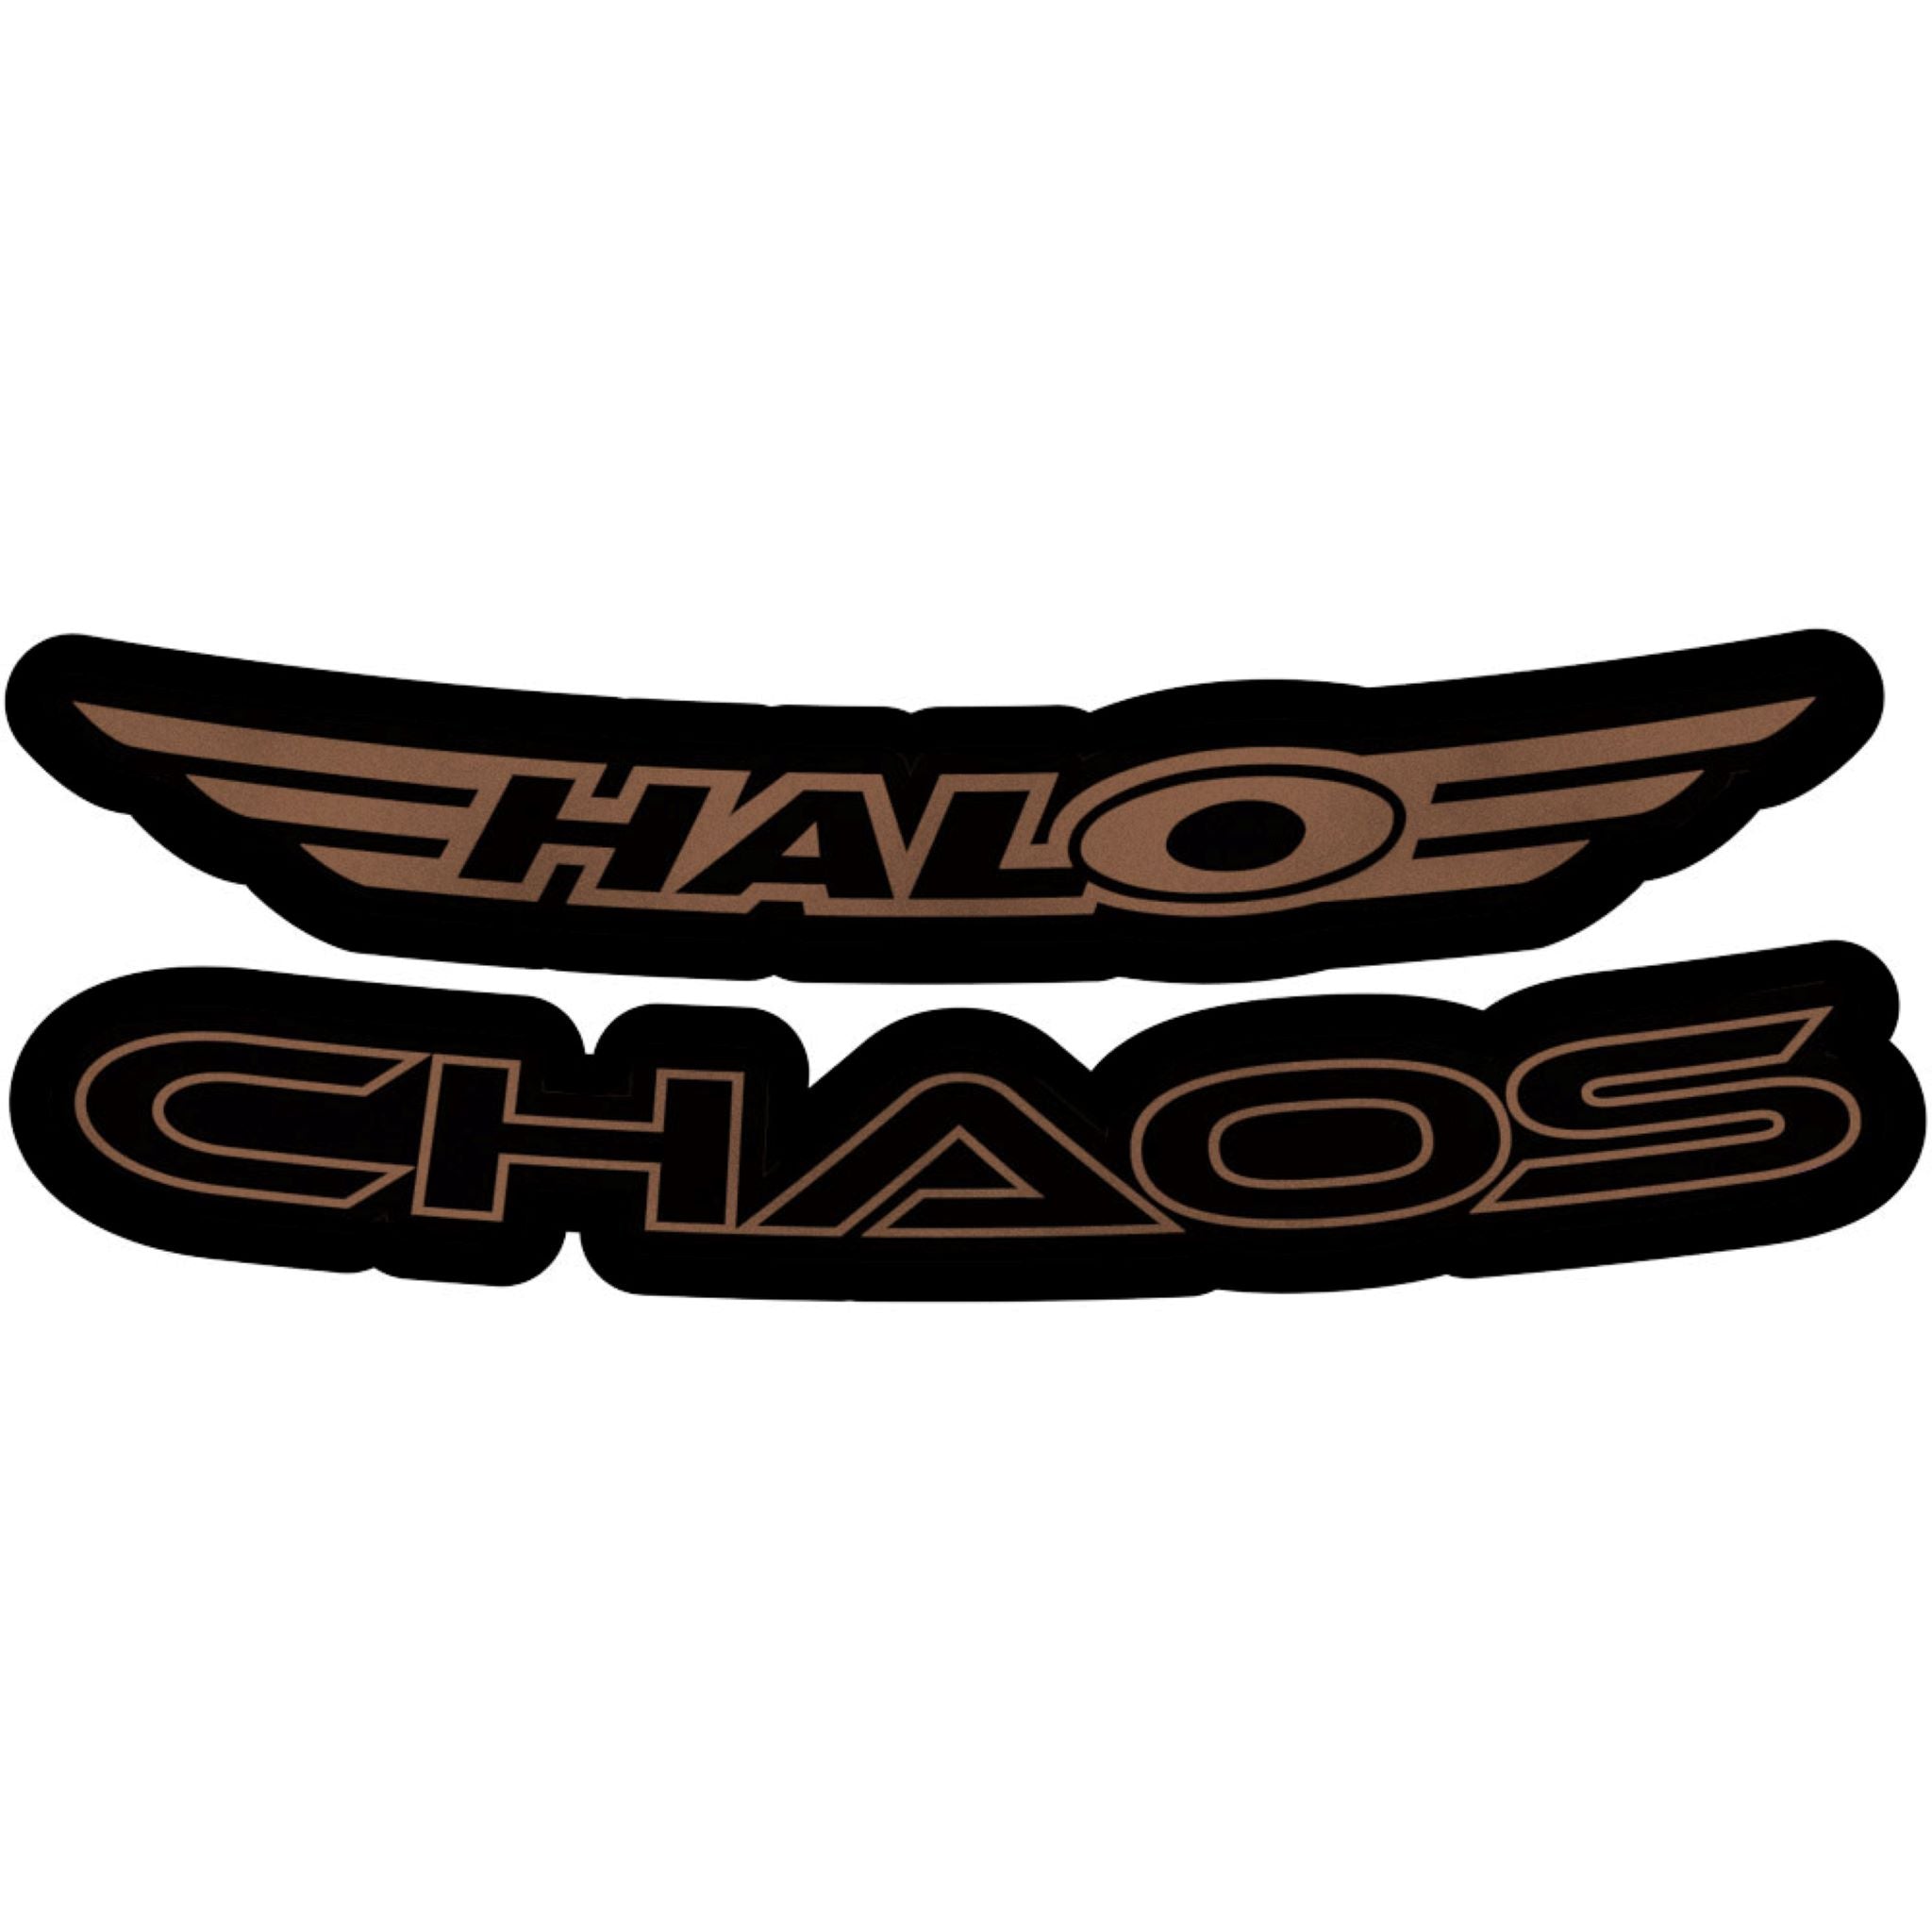 Halo Chaos Decal Kit